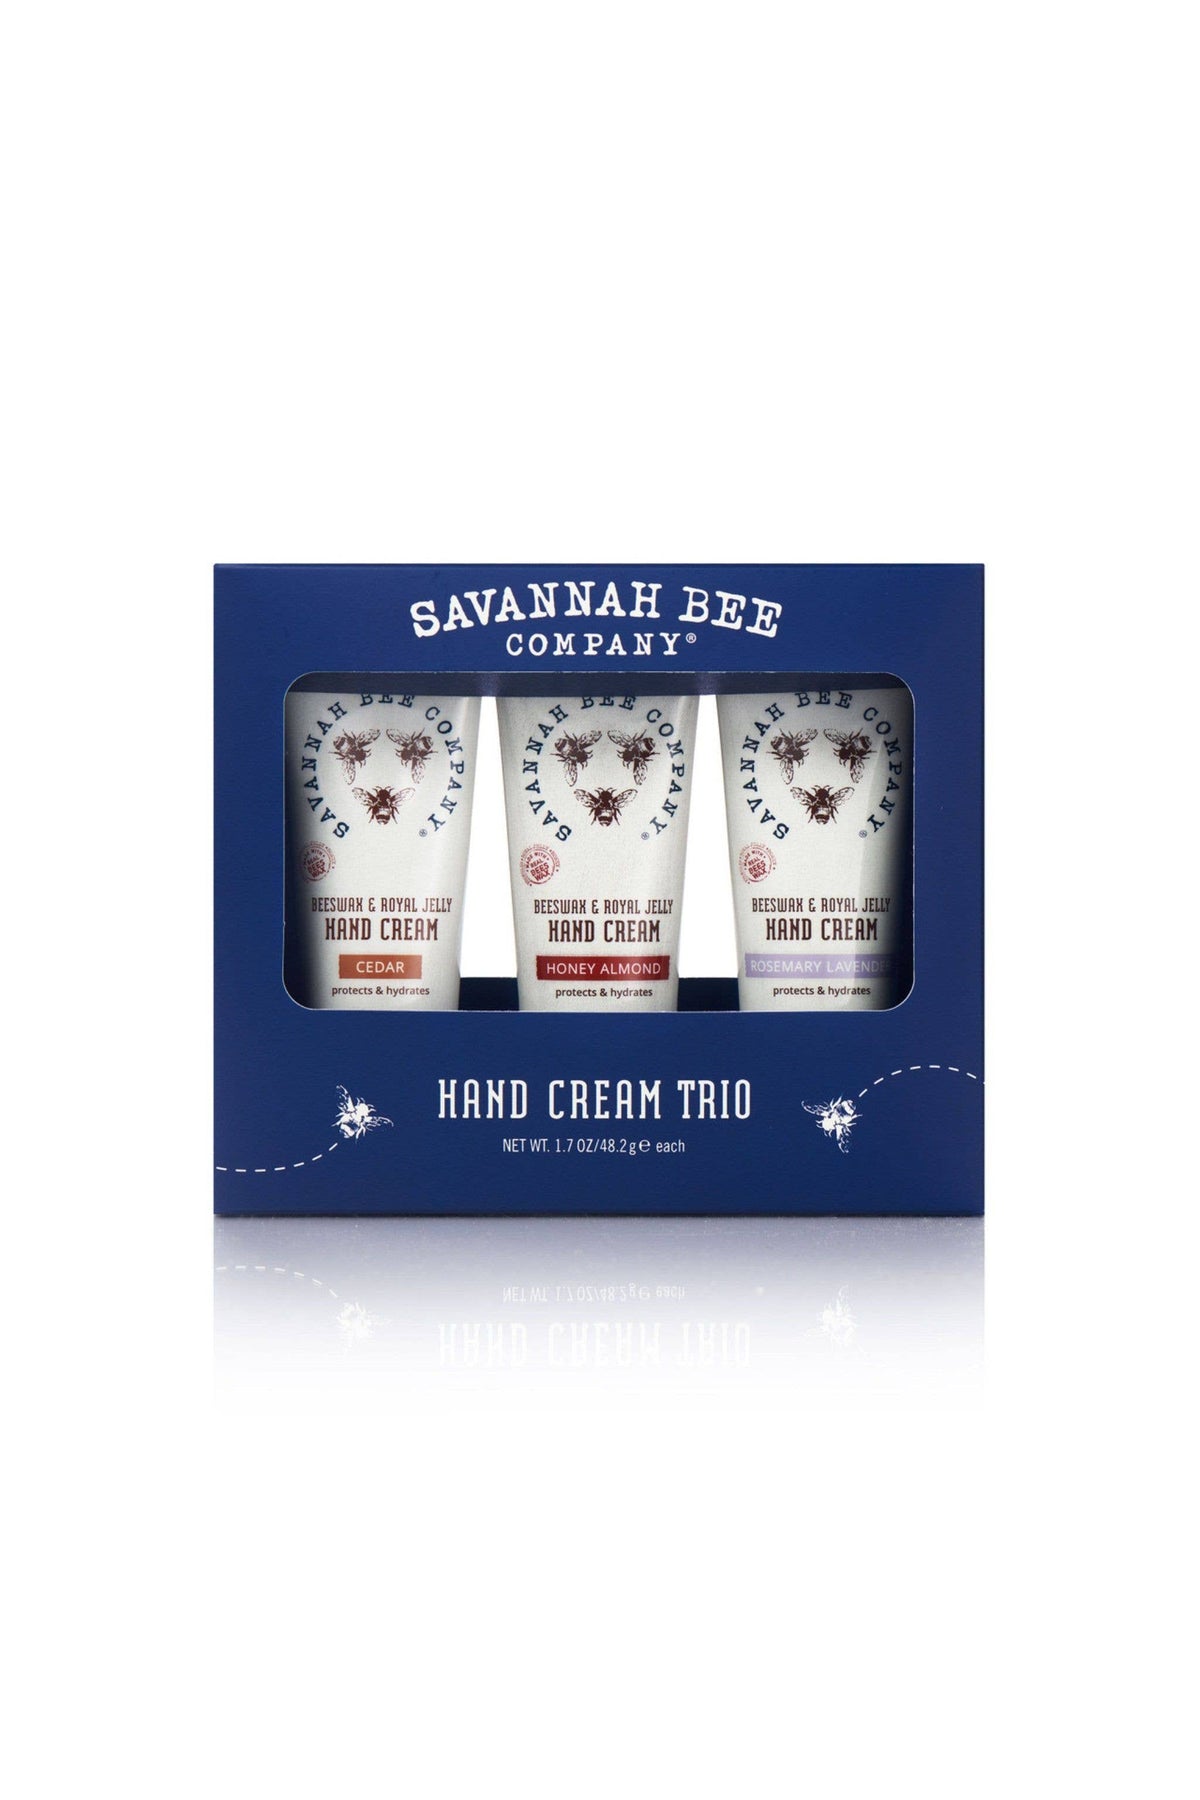 Savannah Bee Company - Hand Cream Trio Set in Box - Blue Packaging